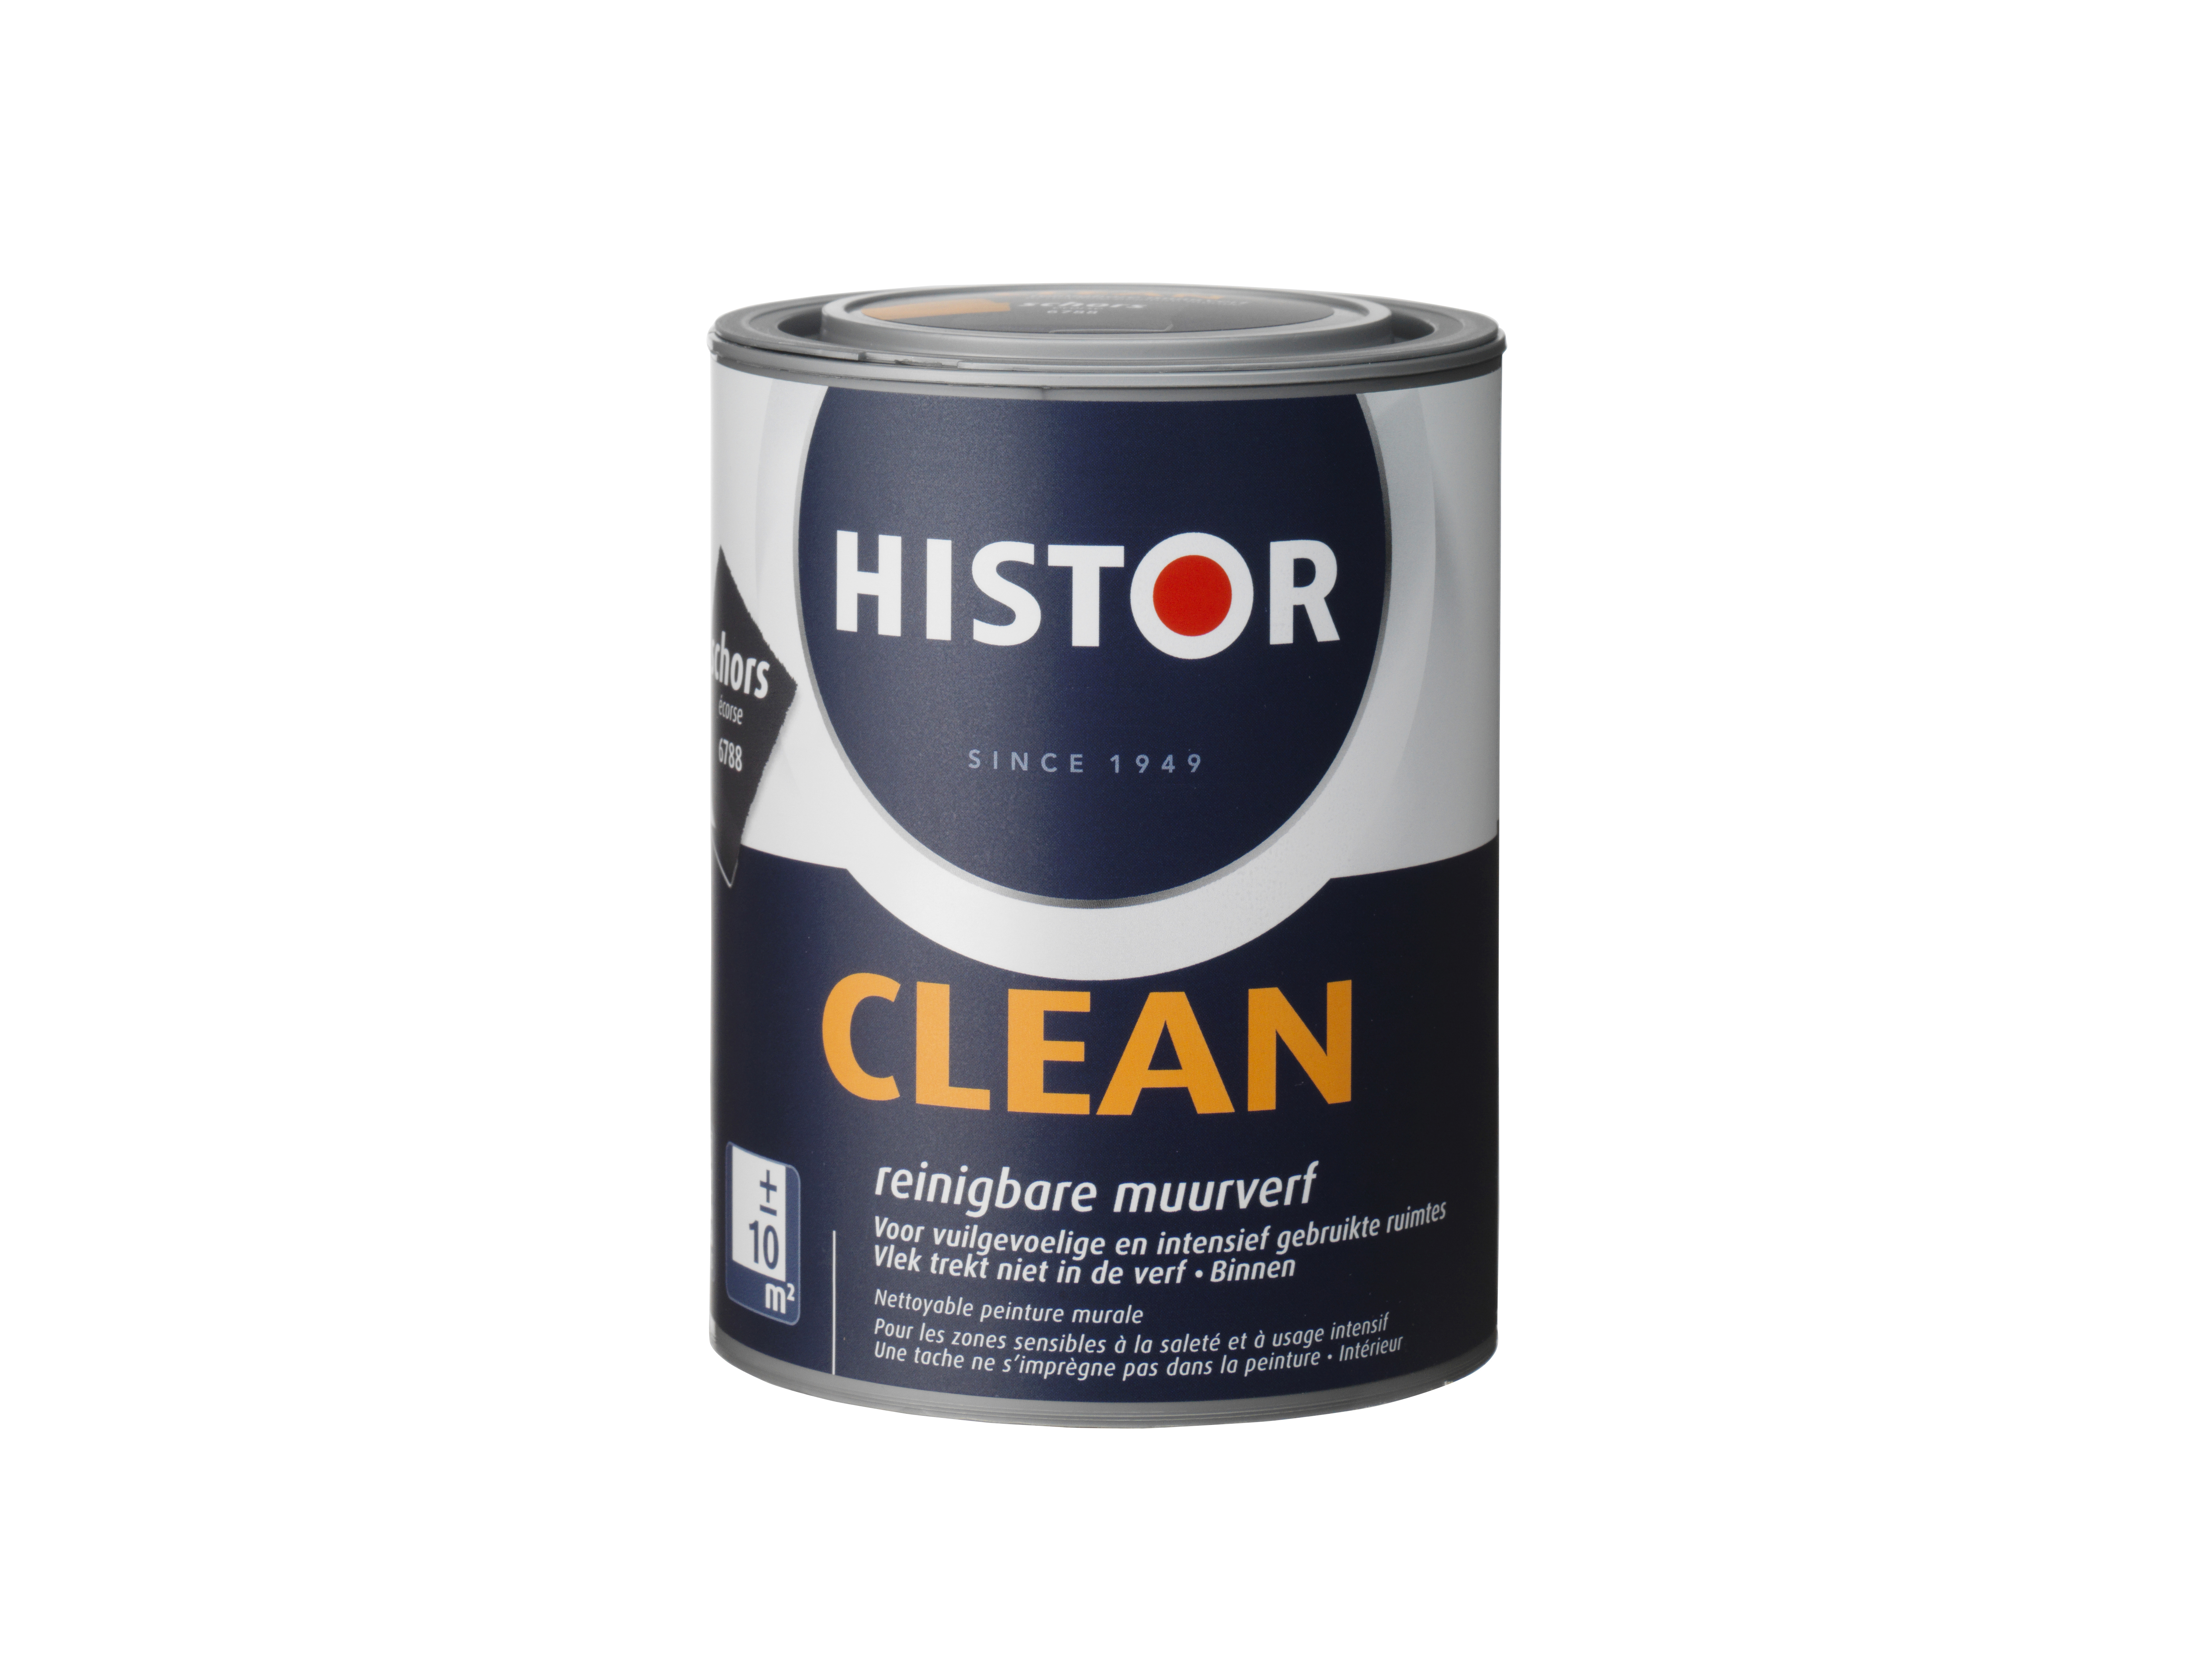 Histor clean muurverf 6788 1 l